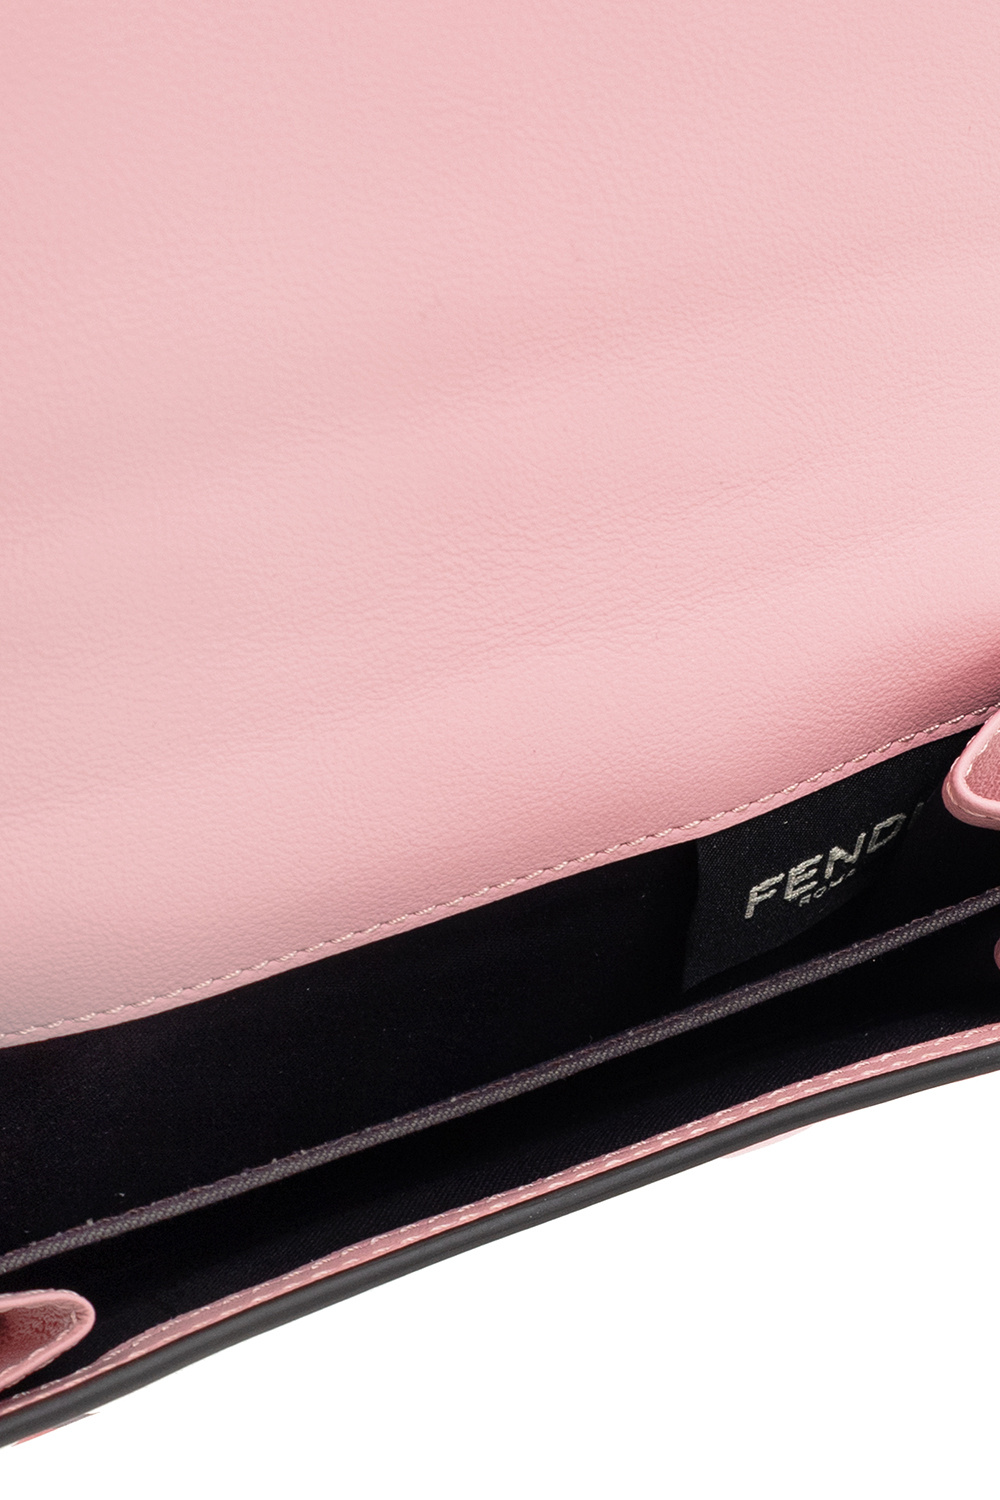 Fendi ‘Baguette Medium’ leather wallet